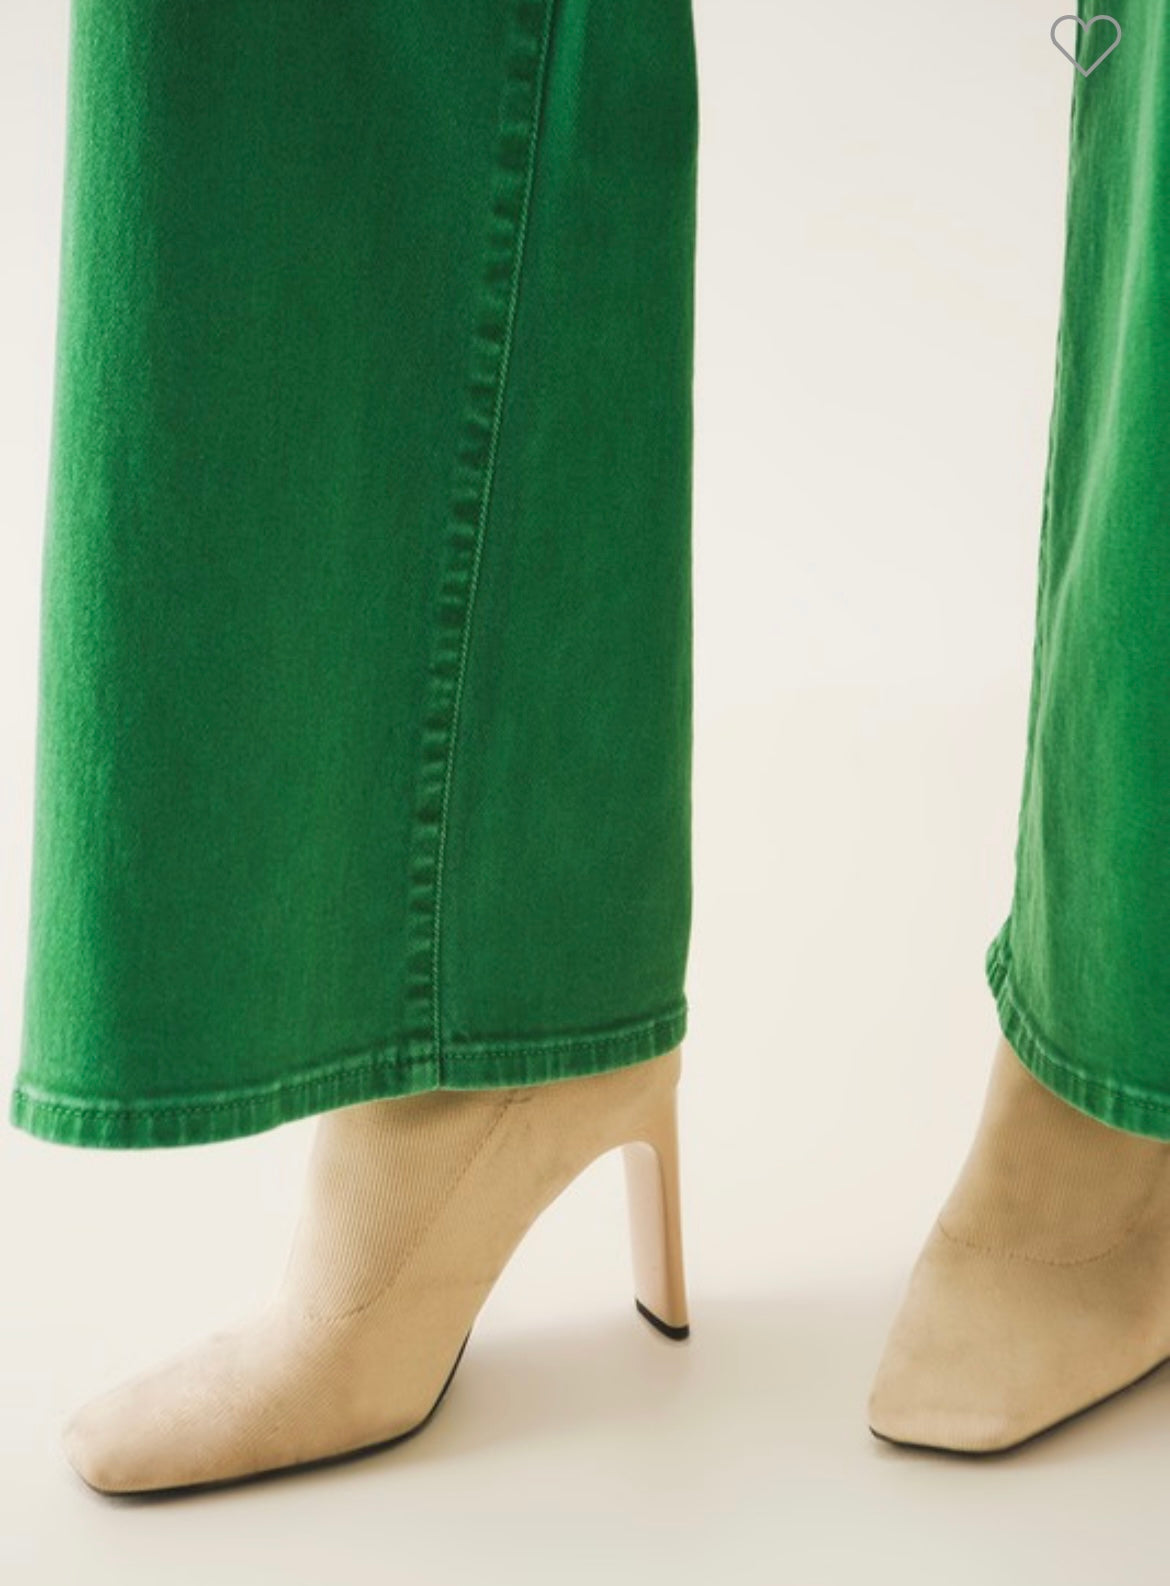 Cotton blend wide leg jeans in green